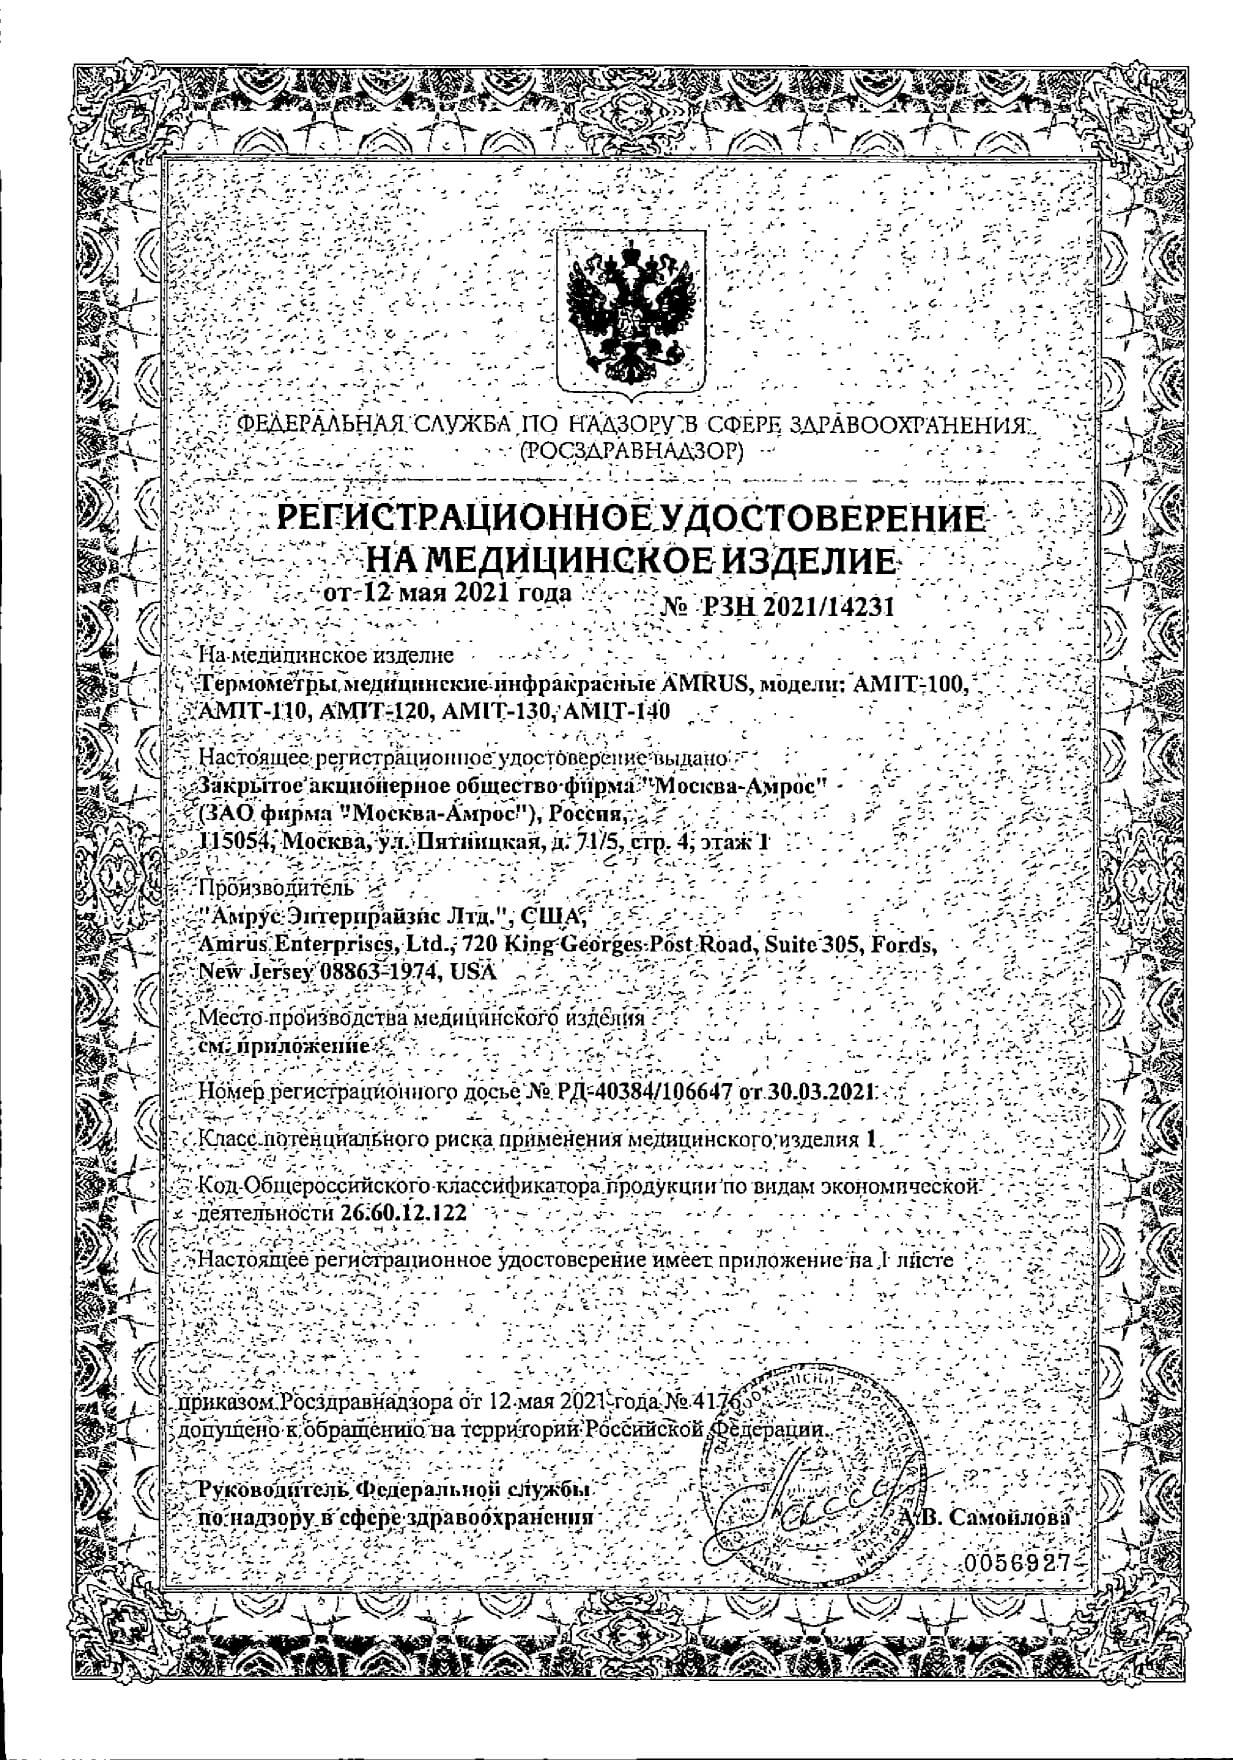 Термометр медицинский инфракрасный AMIT-140 Amrus/Амрус: сертификат